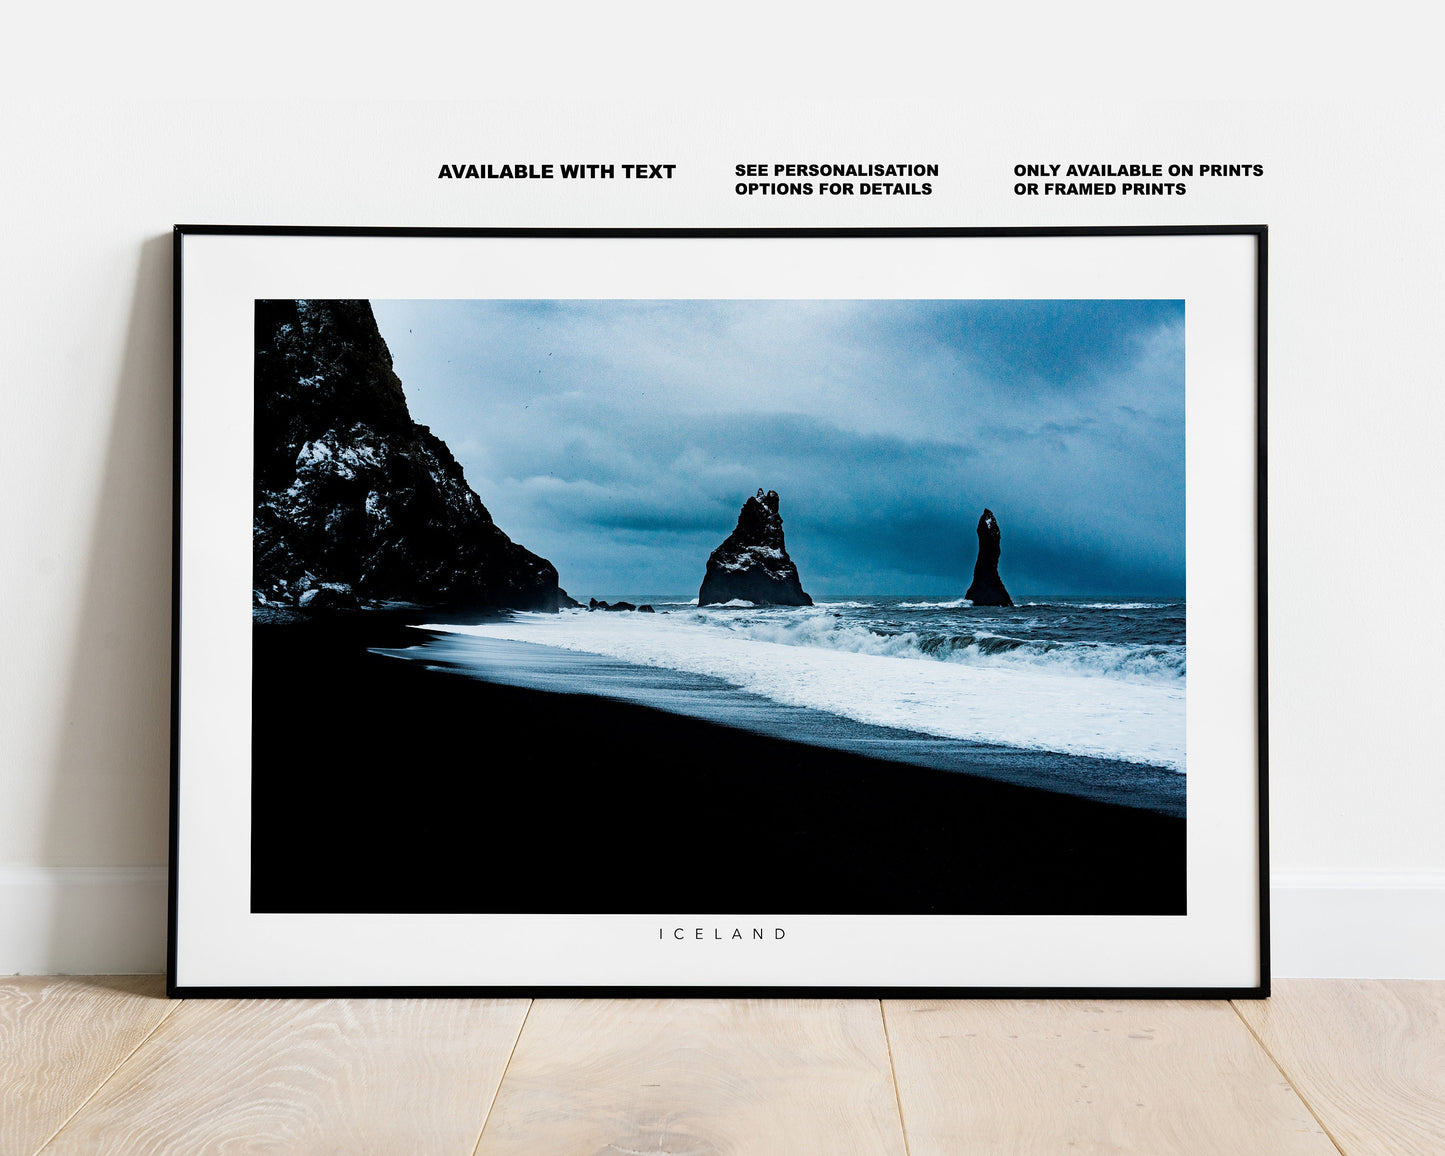 Reynisfjara Black Sand Beach -  Iceland Photography Print - Iceland Wall Art - Iceland Poster - Landscape - Icelandic Beach - Black Sand